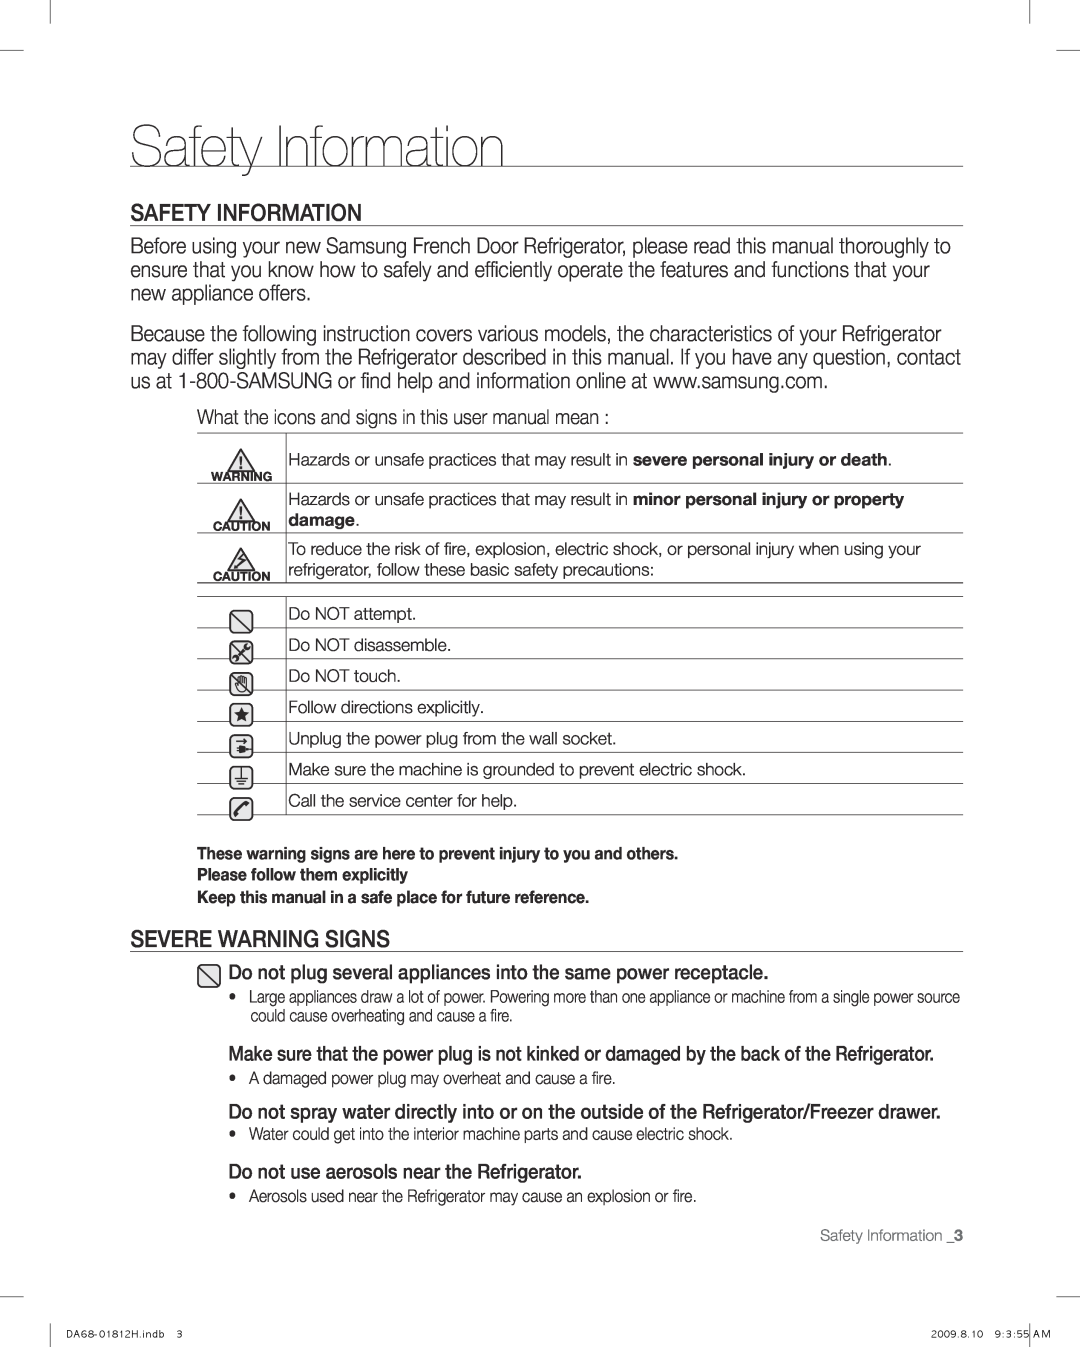 Samsung RF263 user manual Safety Information, Severe Warning Signs 